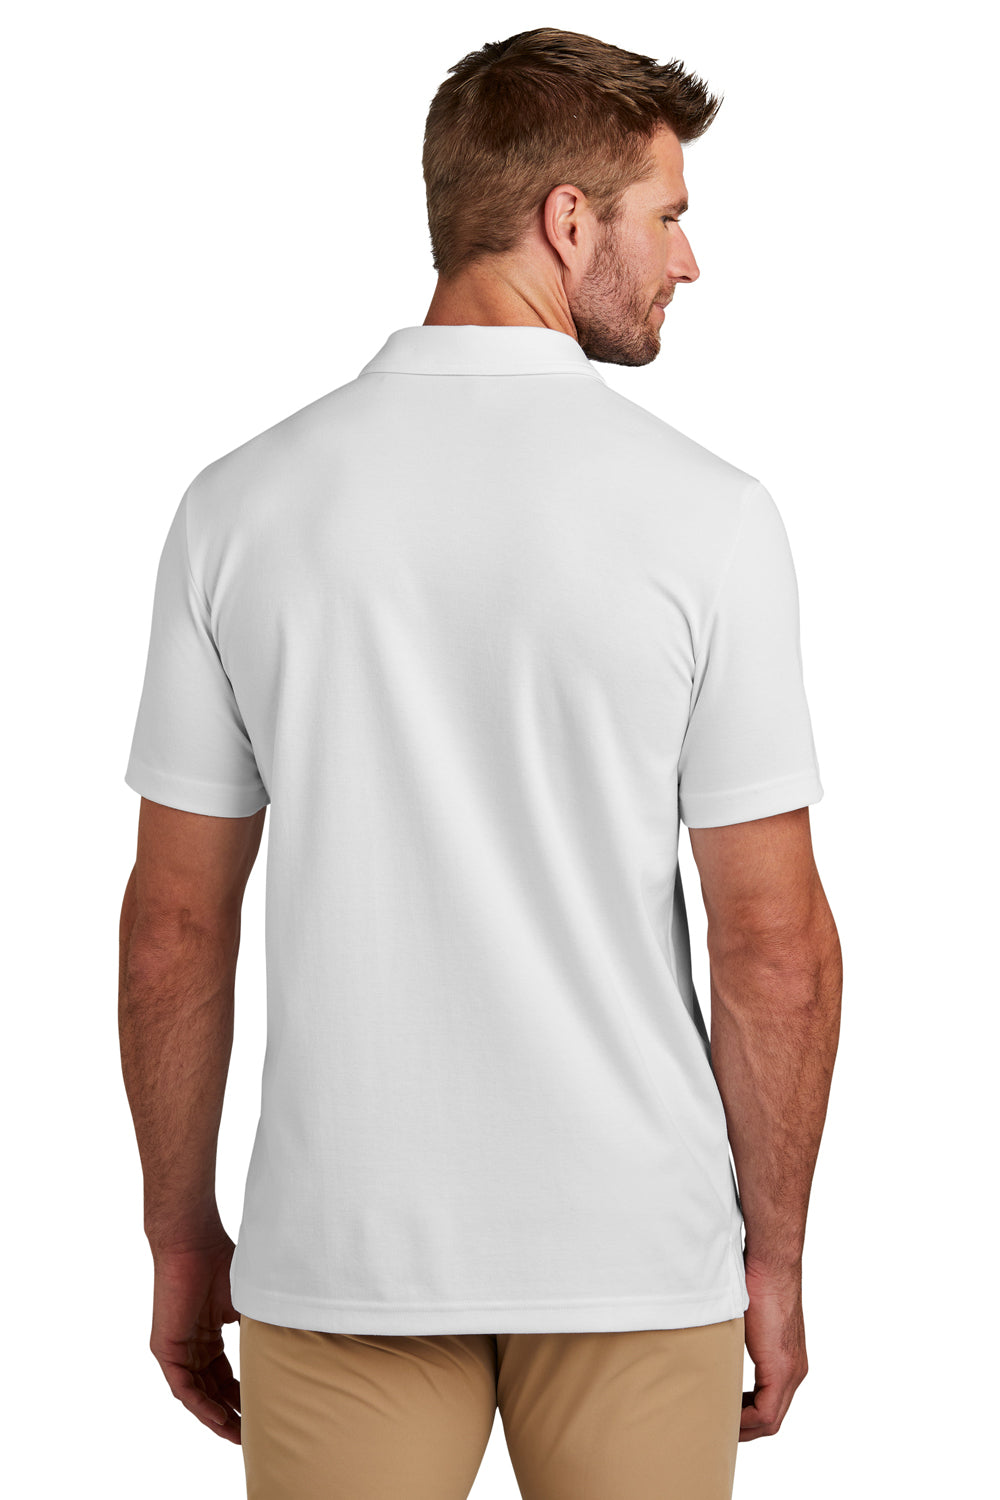 TravisMathew TM1MY402 Mens Coastal Wrinkle Resistant Short Sleeve Polo Shirt White Model Back